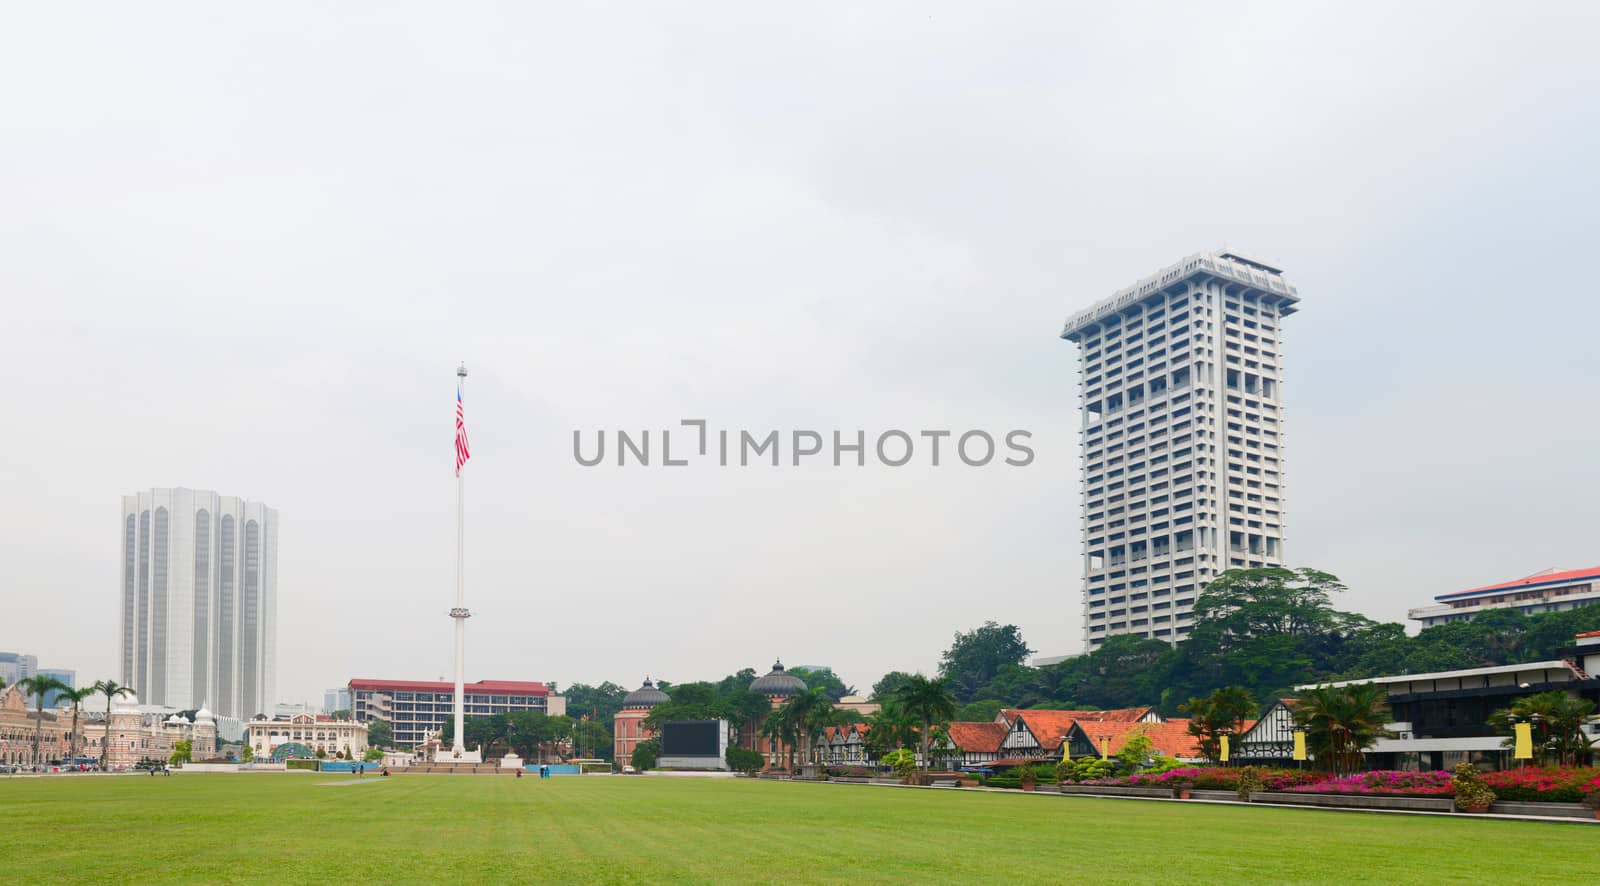 Merdeka Square (Independence Square) in Kuala Lumpur by iryna_rasko